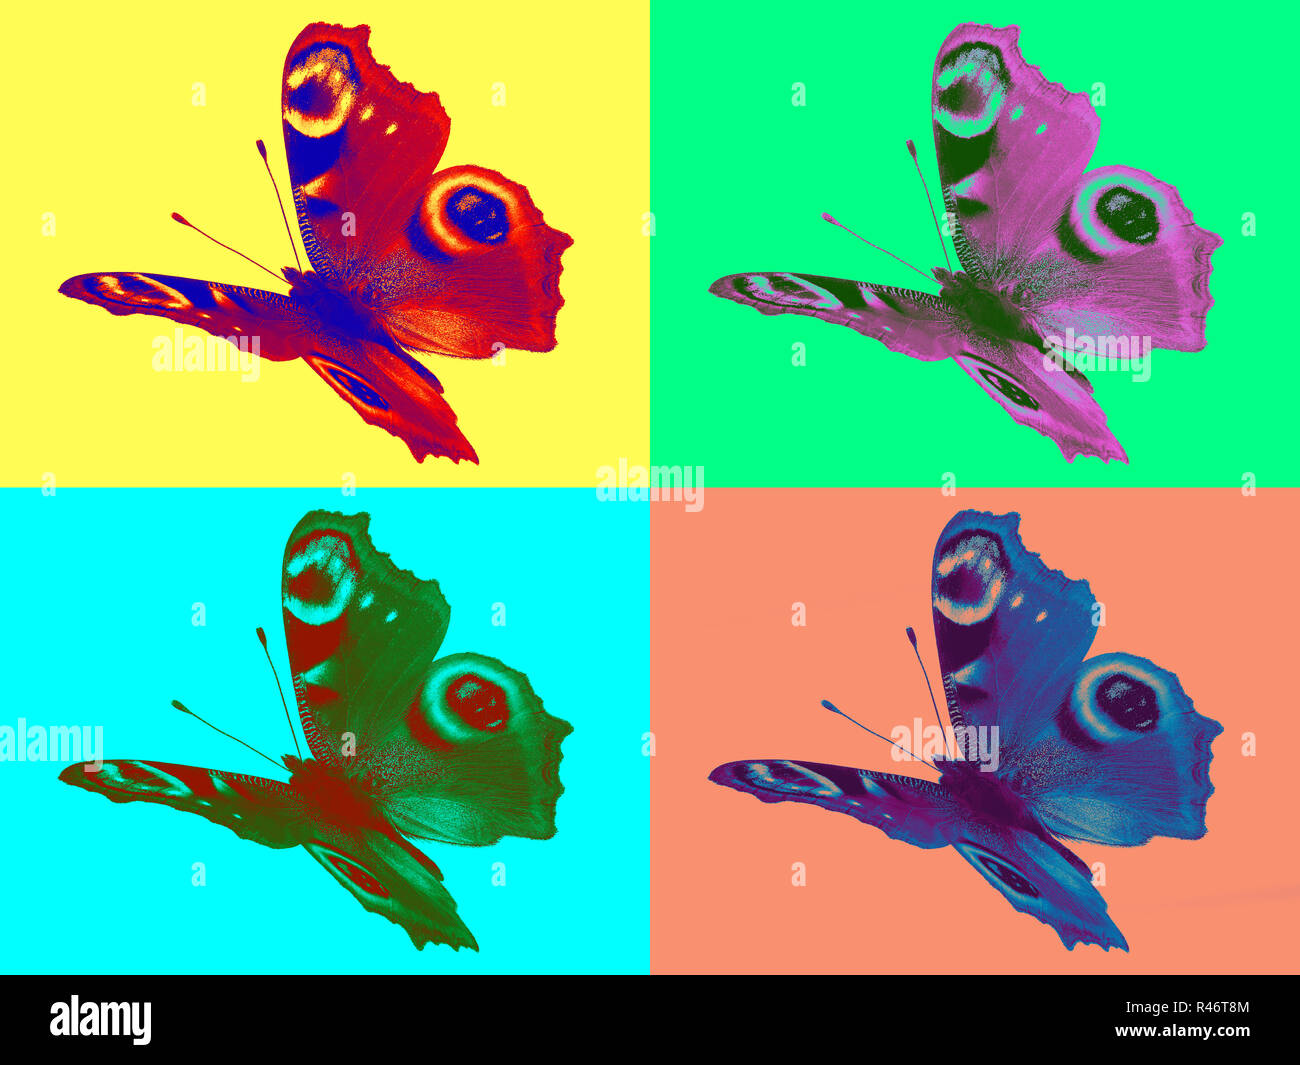 Aglais io flying in pop art style Stock Photo